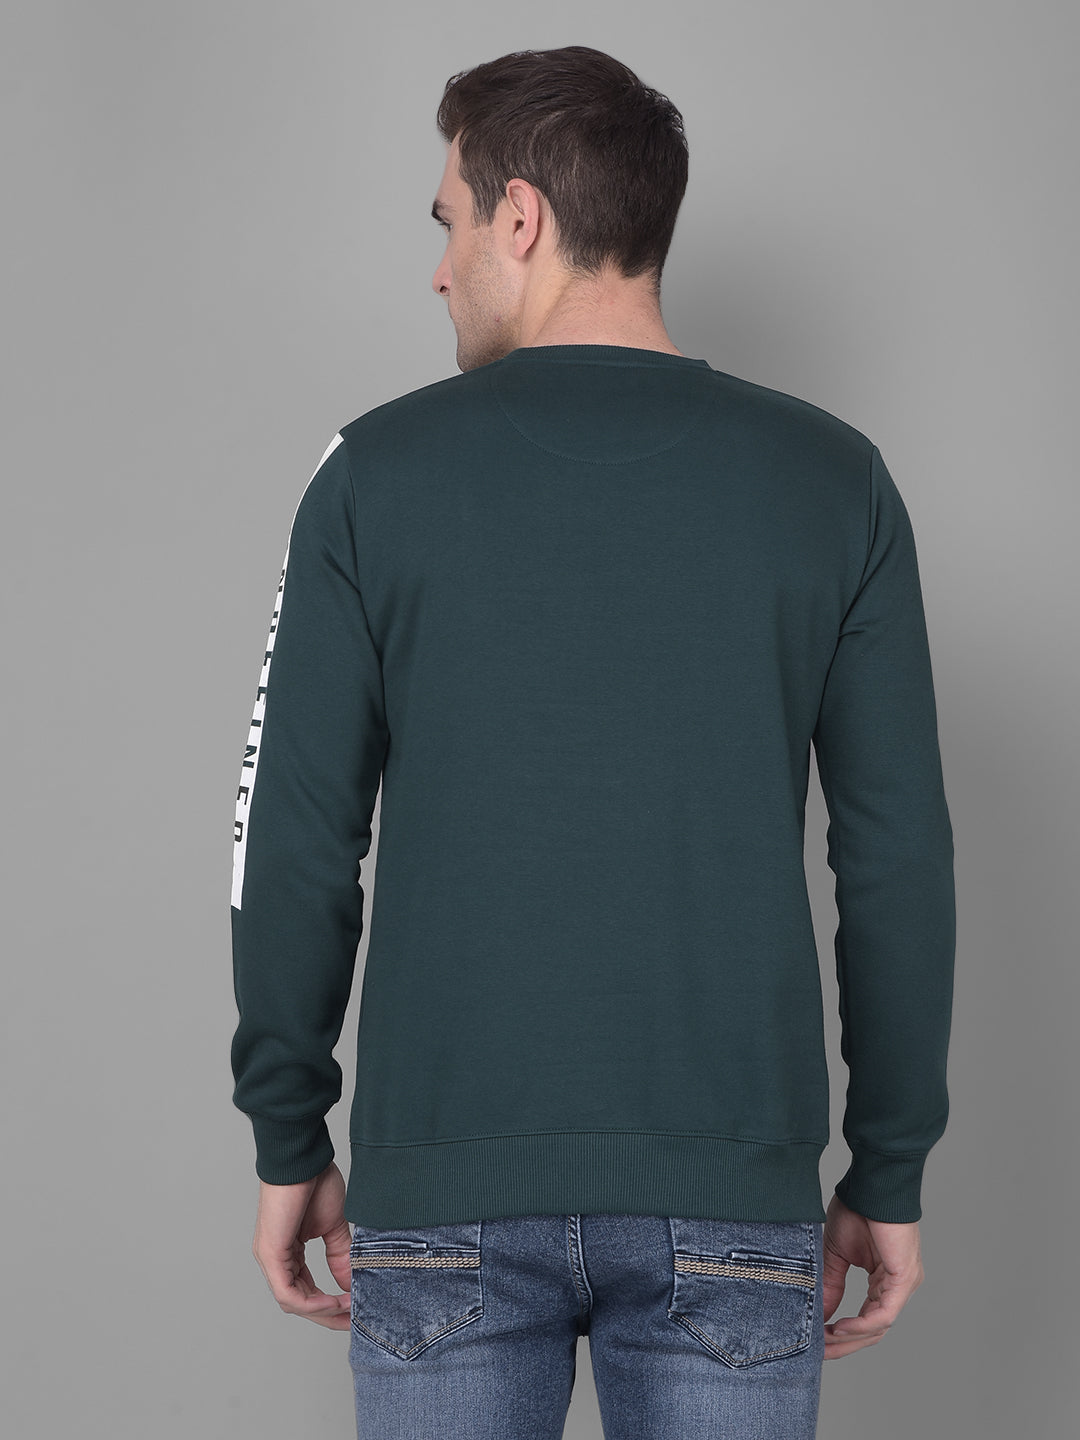 cobb green printed round neck sweatshirt